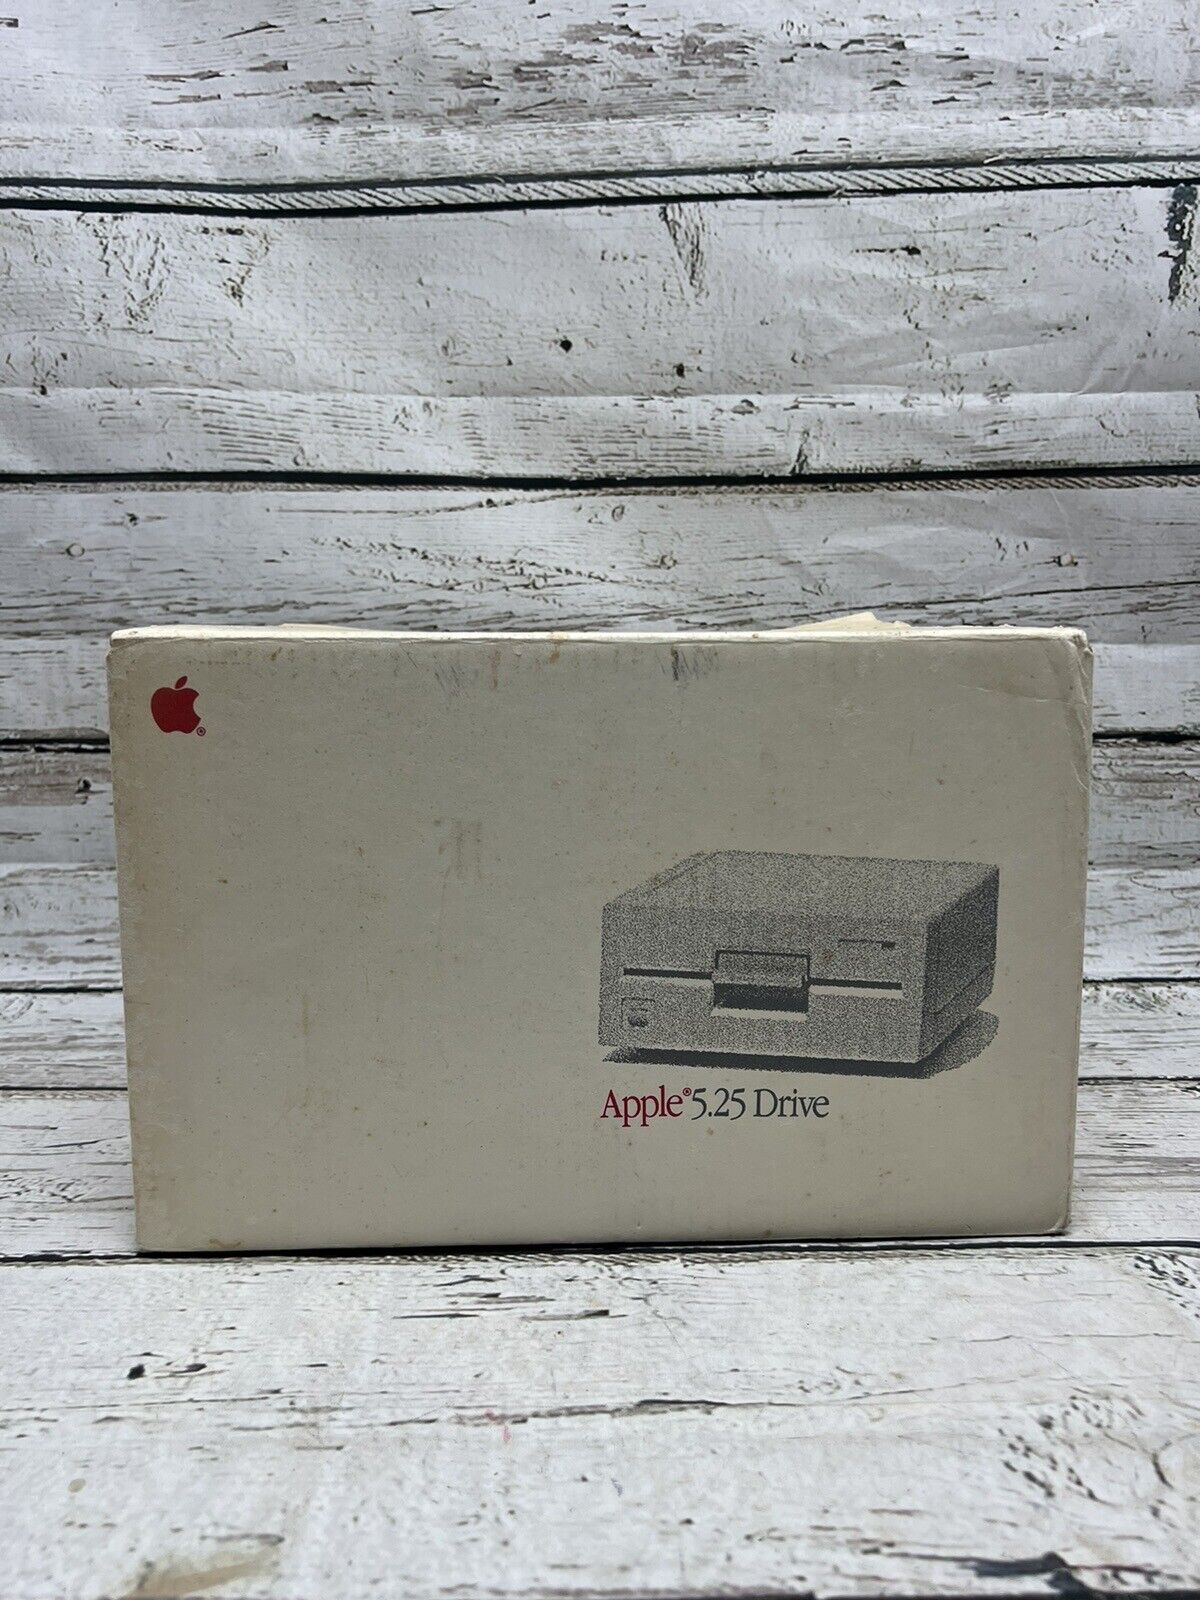 VTG 1988 Apple Macintosh 5.25 Drive Floppy Disk A2M4050 USA - BOX ONLY NO DRIVE